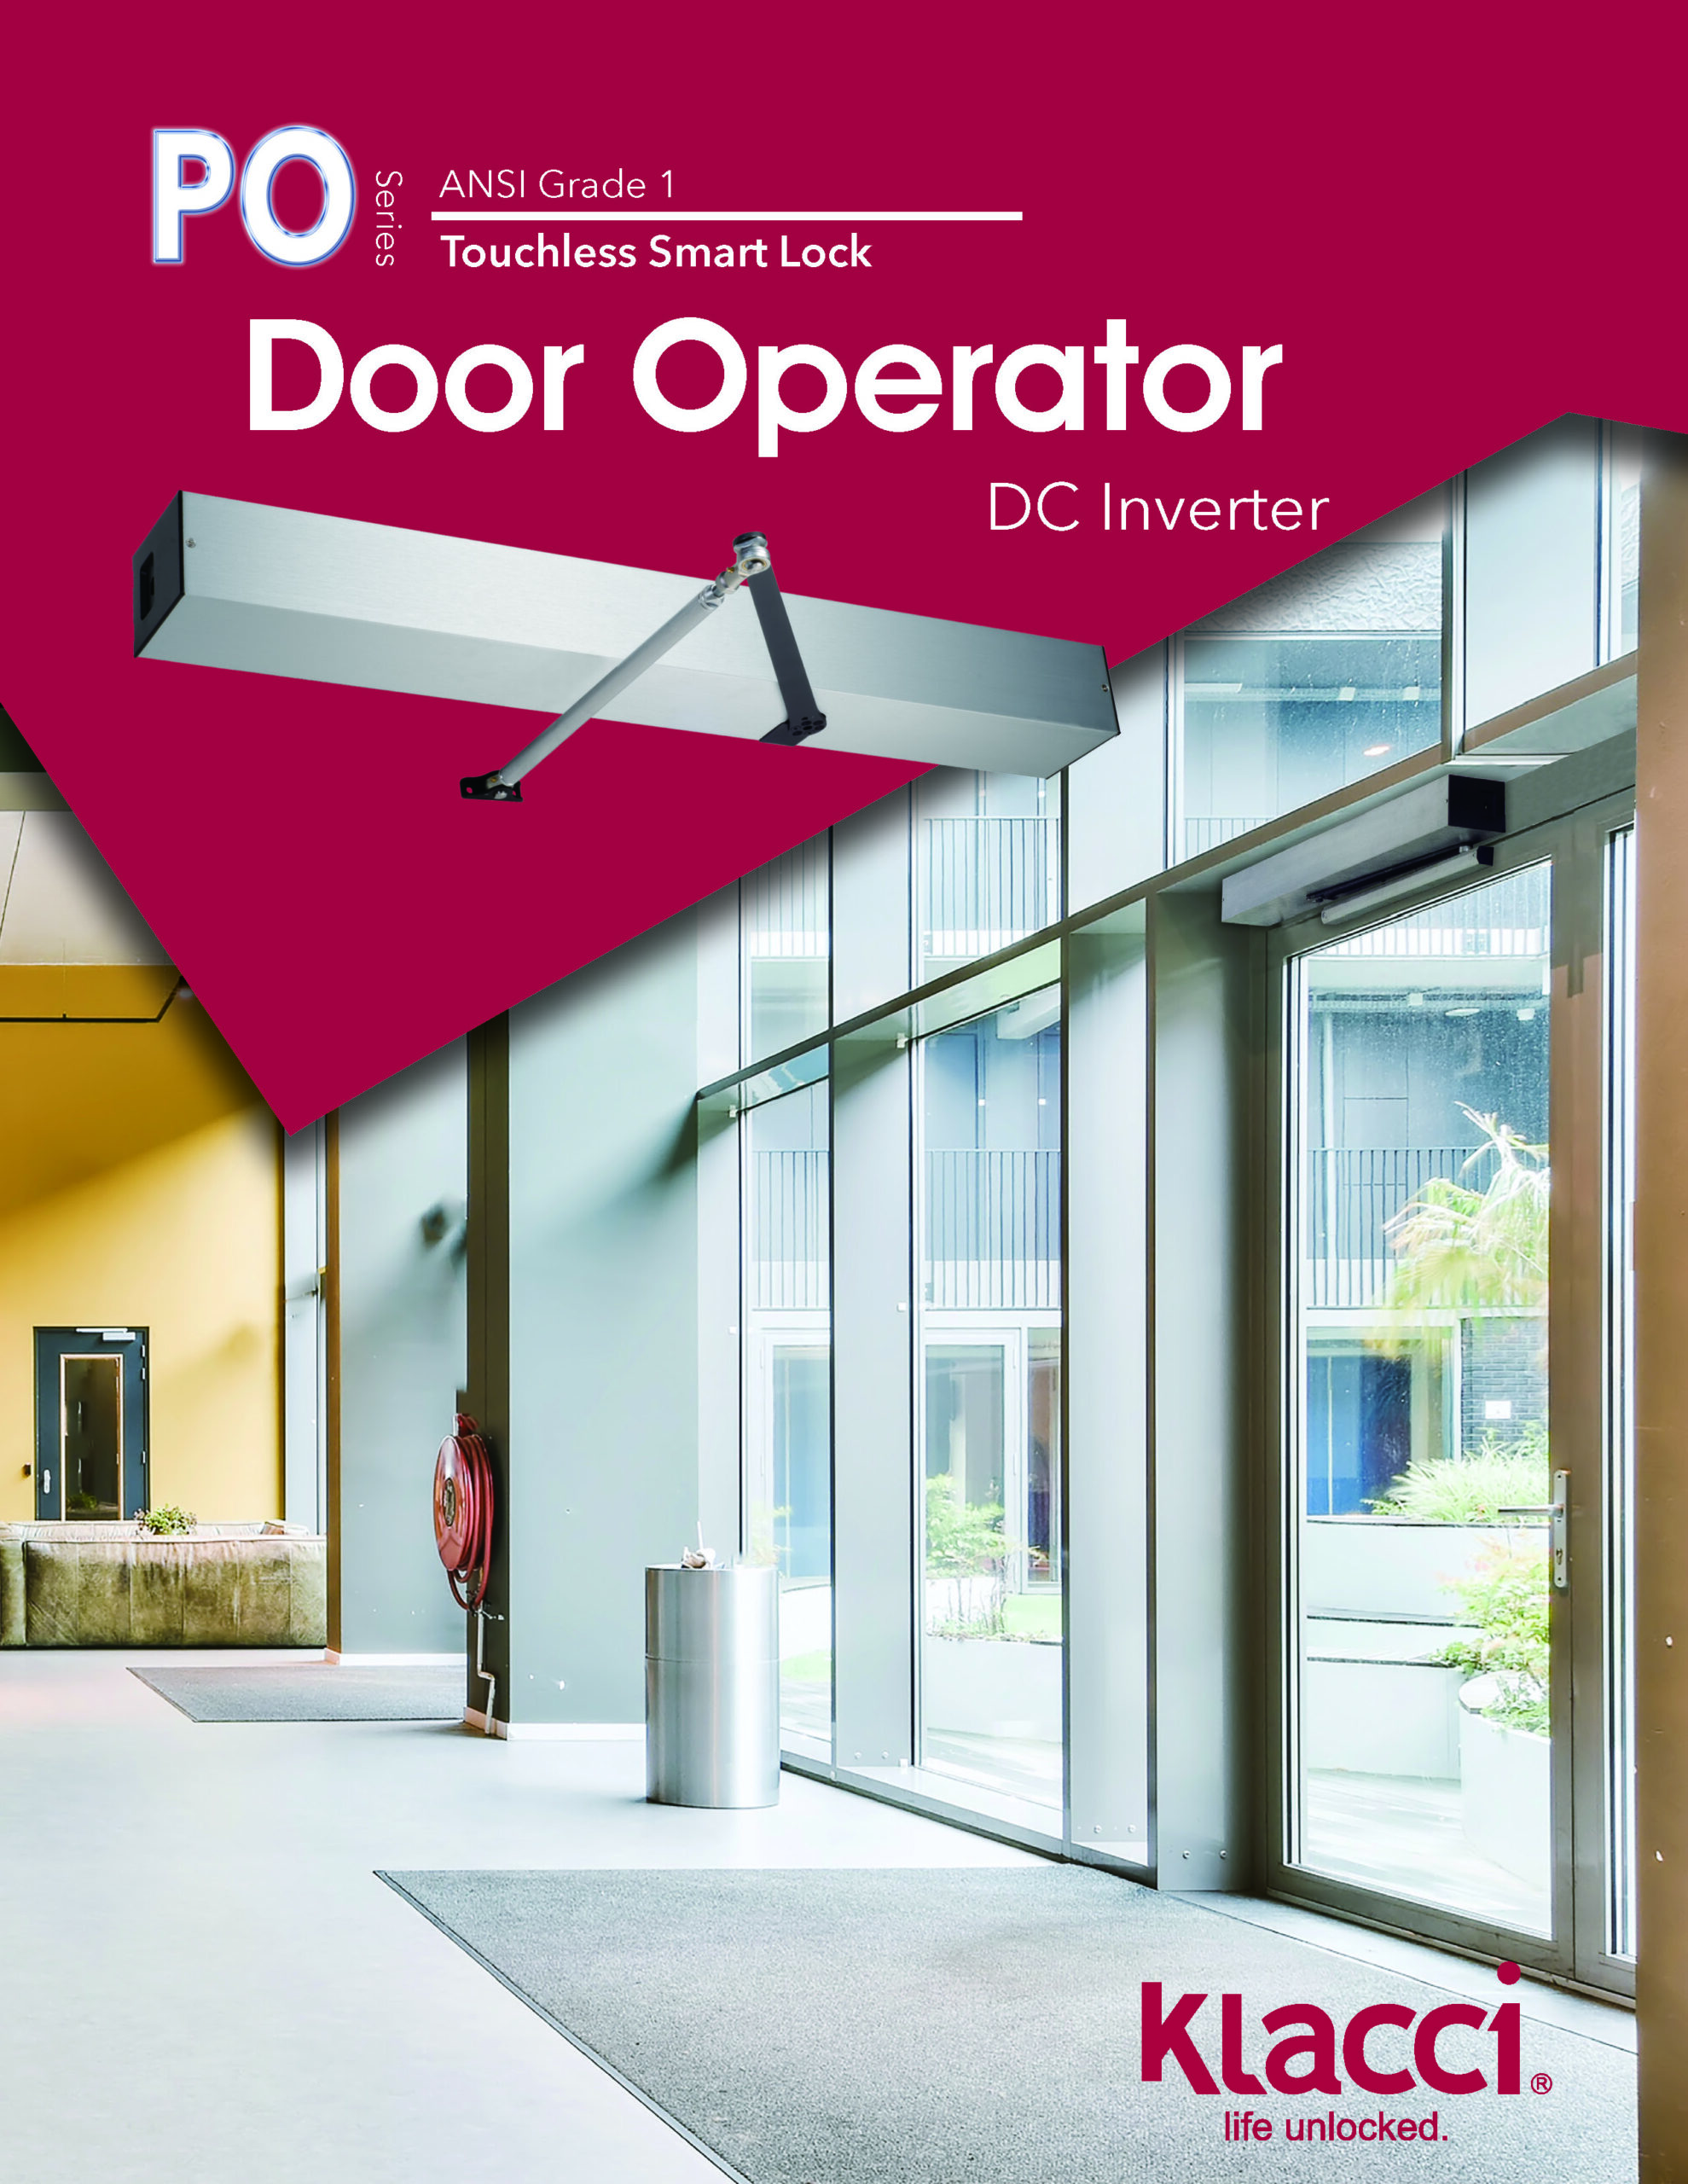 Klacci PO Series Door Operator Catalog